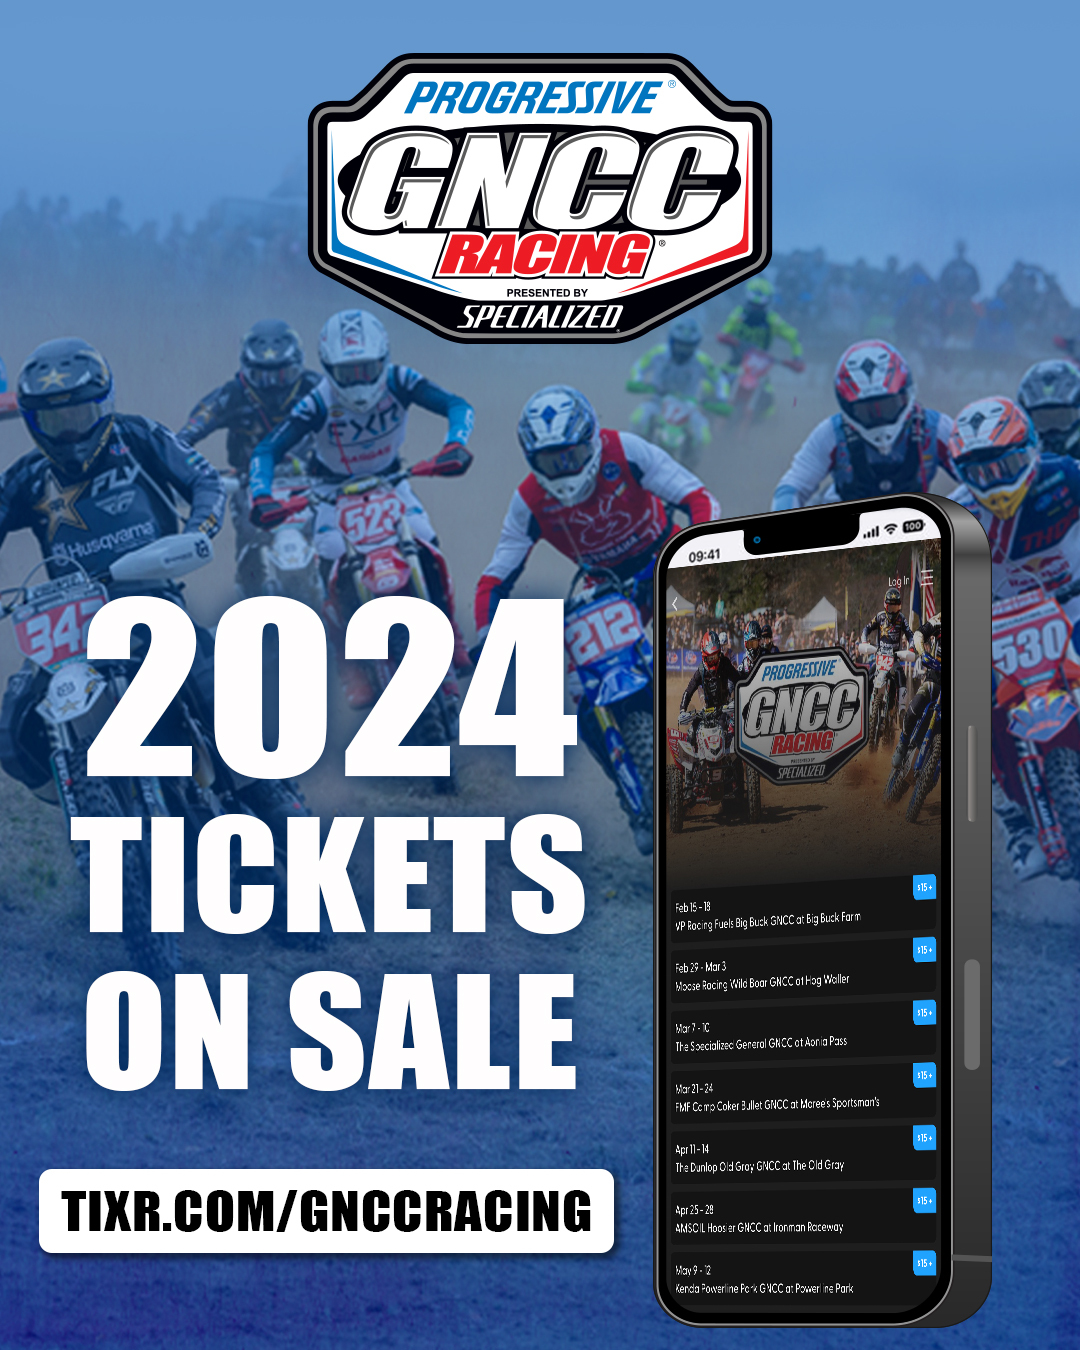 Progressive GNCC Racing Series Launches Online Ticket Sales for 2024 Season